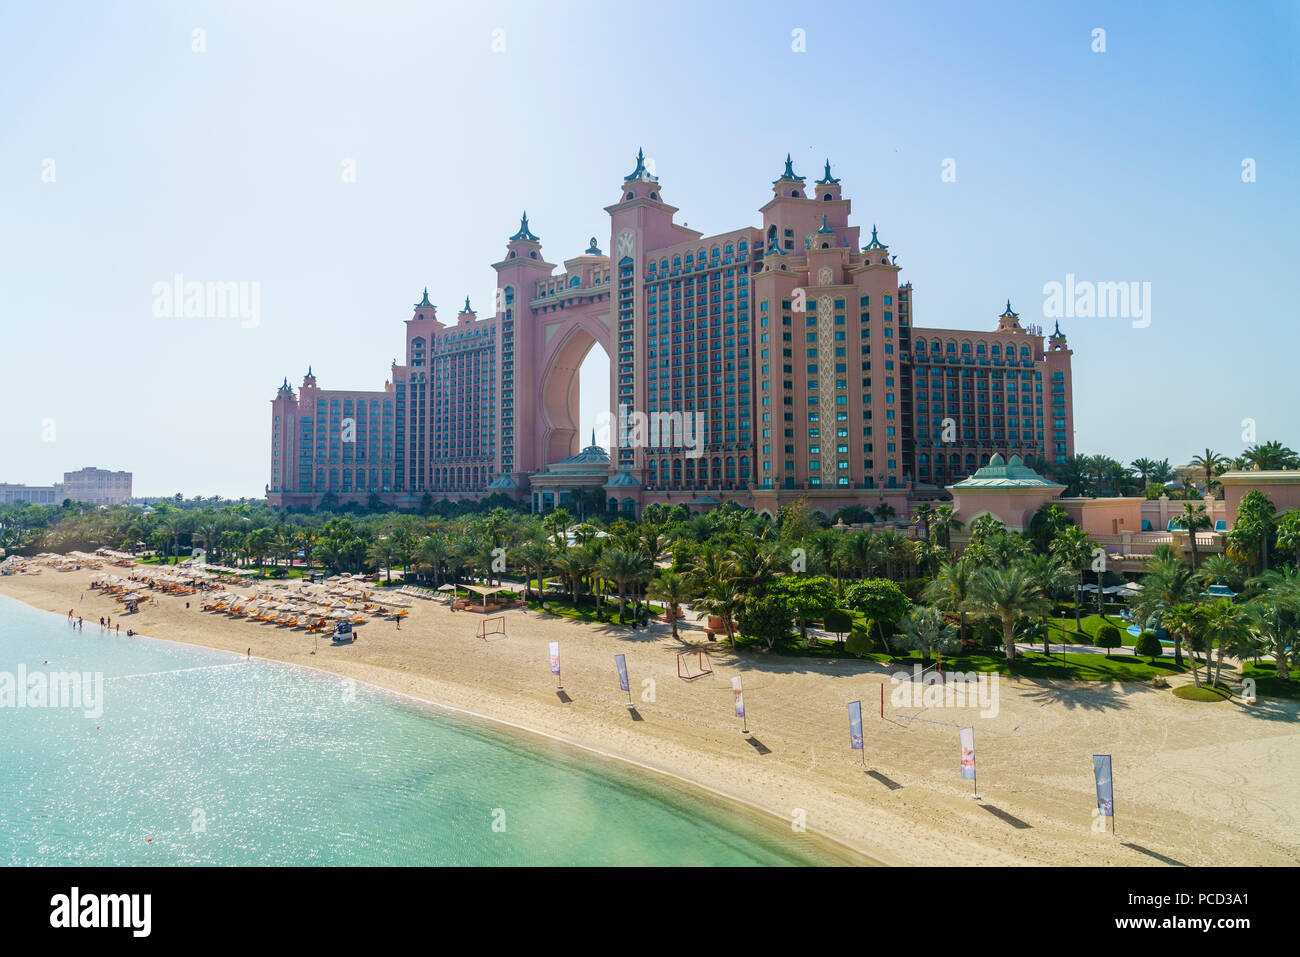 Atlantis, The Palm, a luxury hotel on the man-made Palm Jumeirah island, Dubai, United Arab Emirates, Middle East Stock Photo